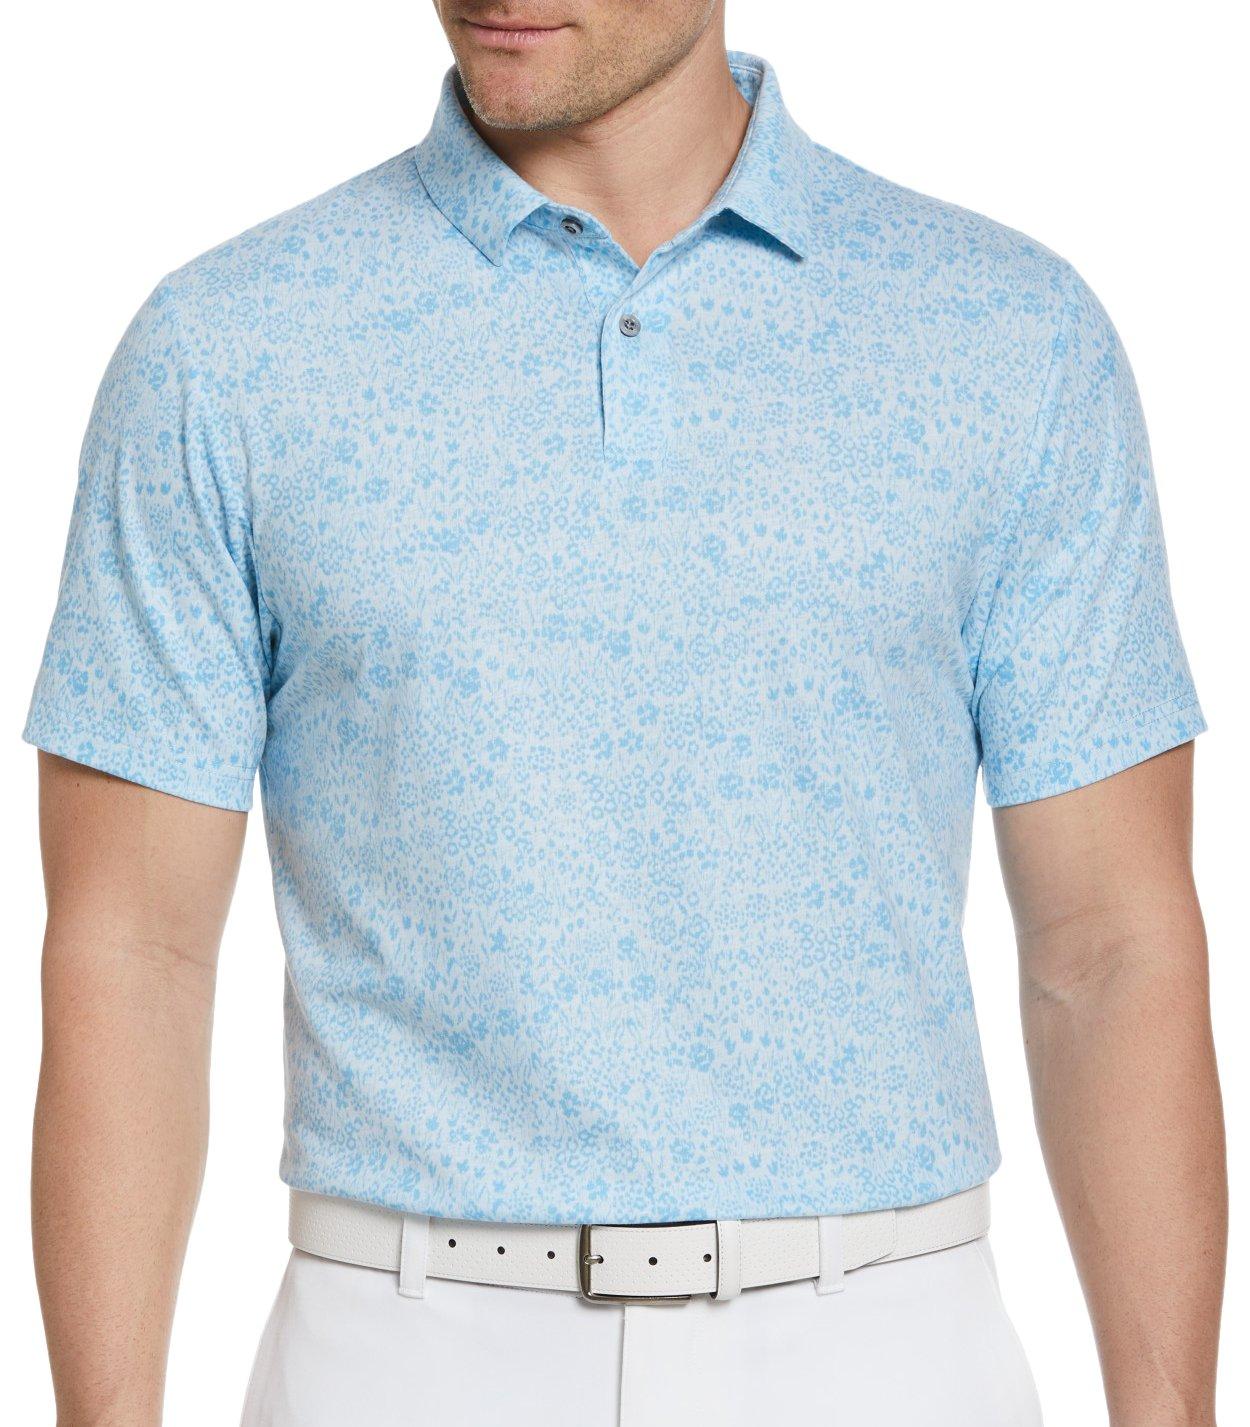 Mens Tropical Print Polo Shirt